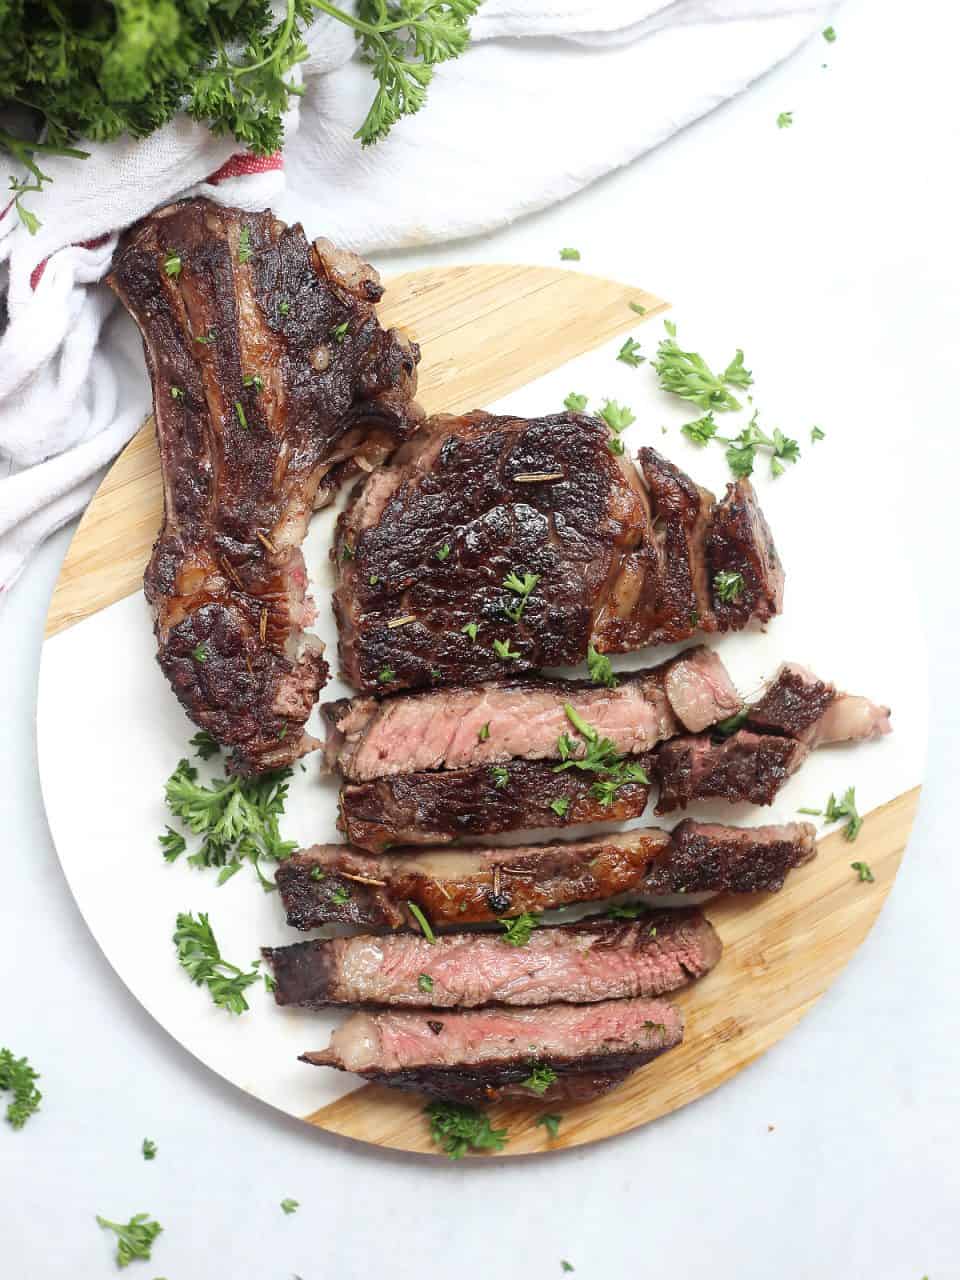 Red wine marinated steak on a round cutting board.